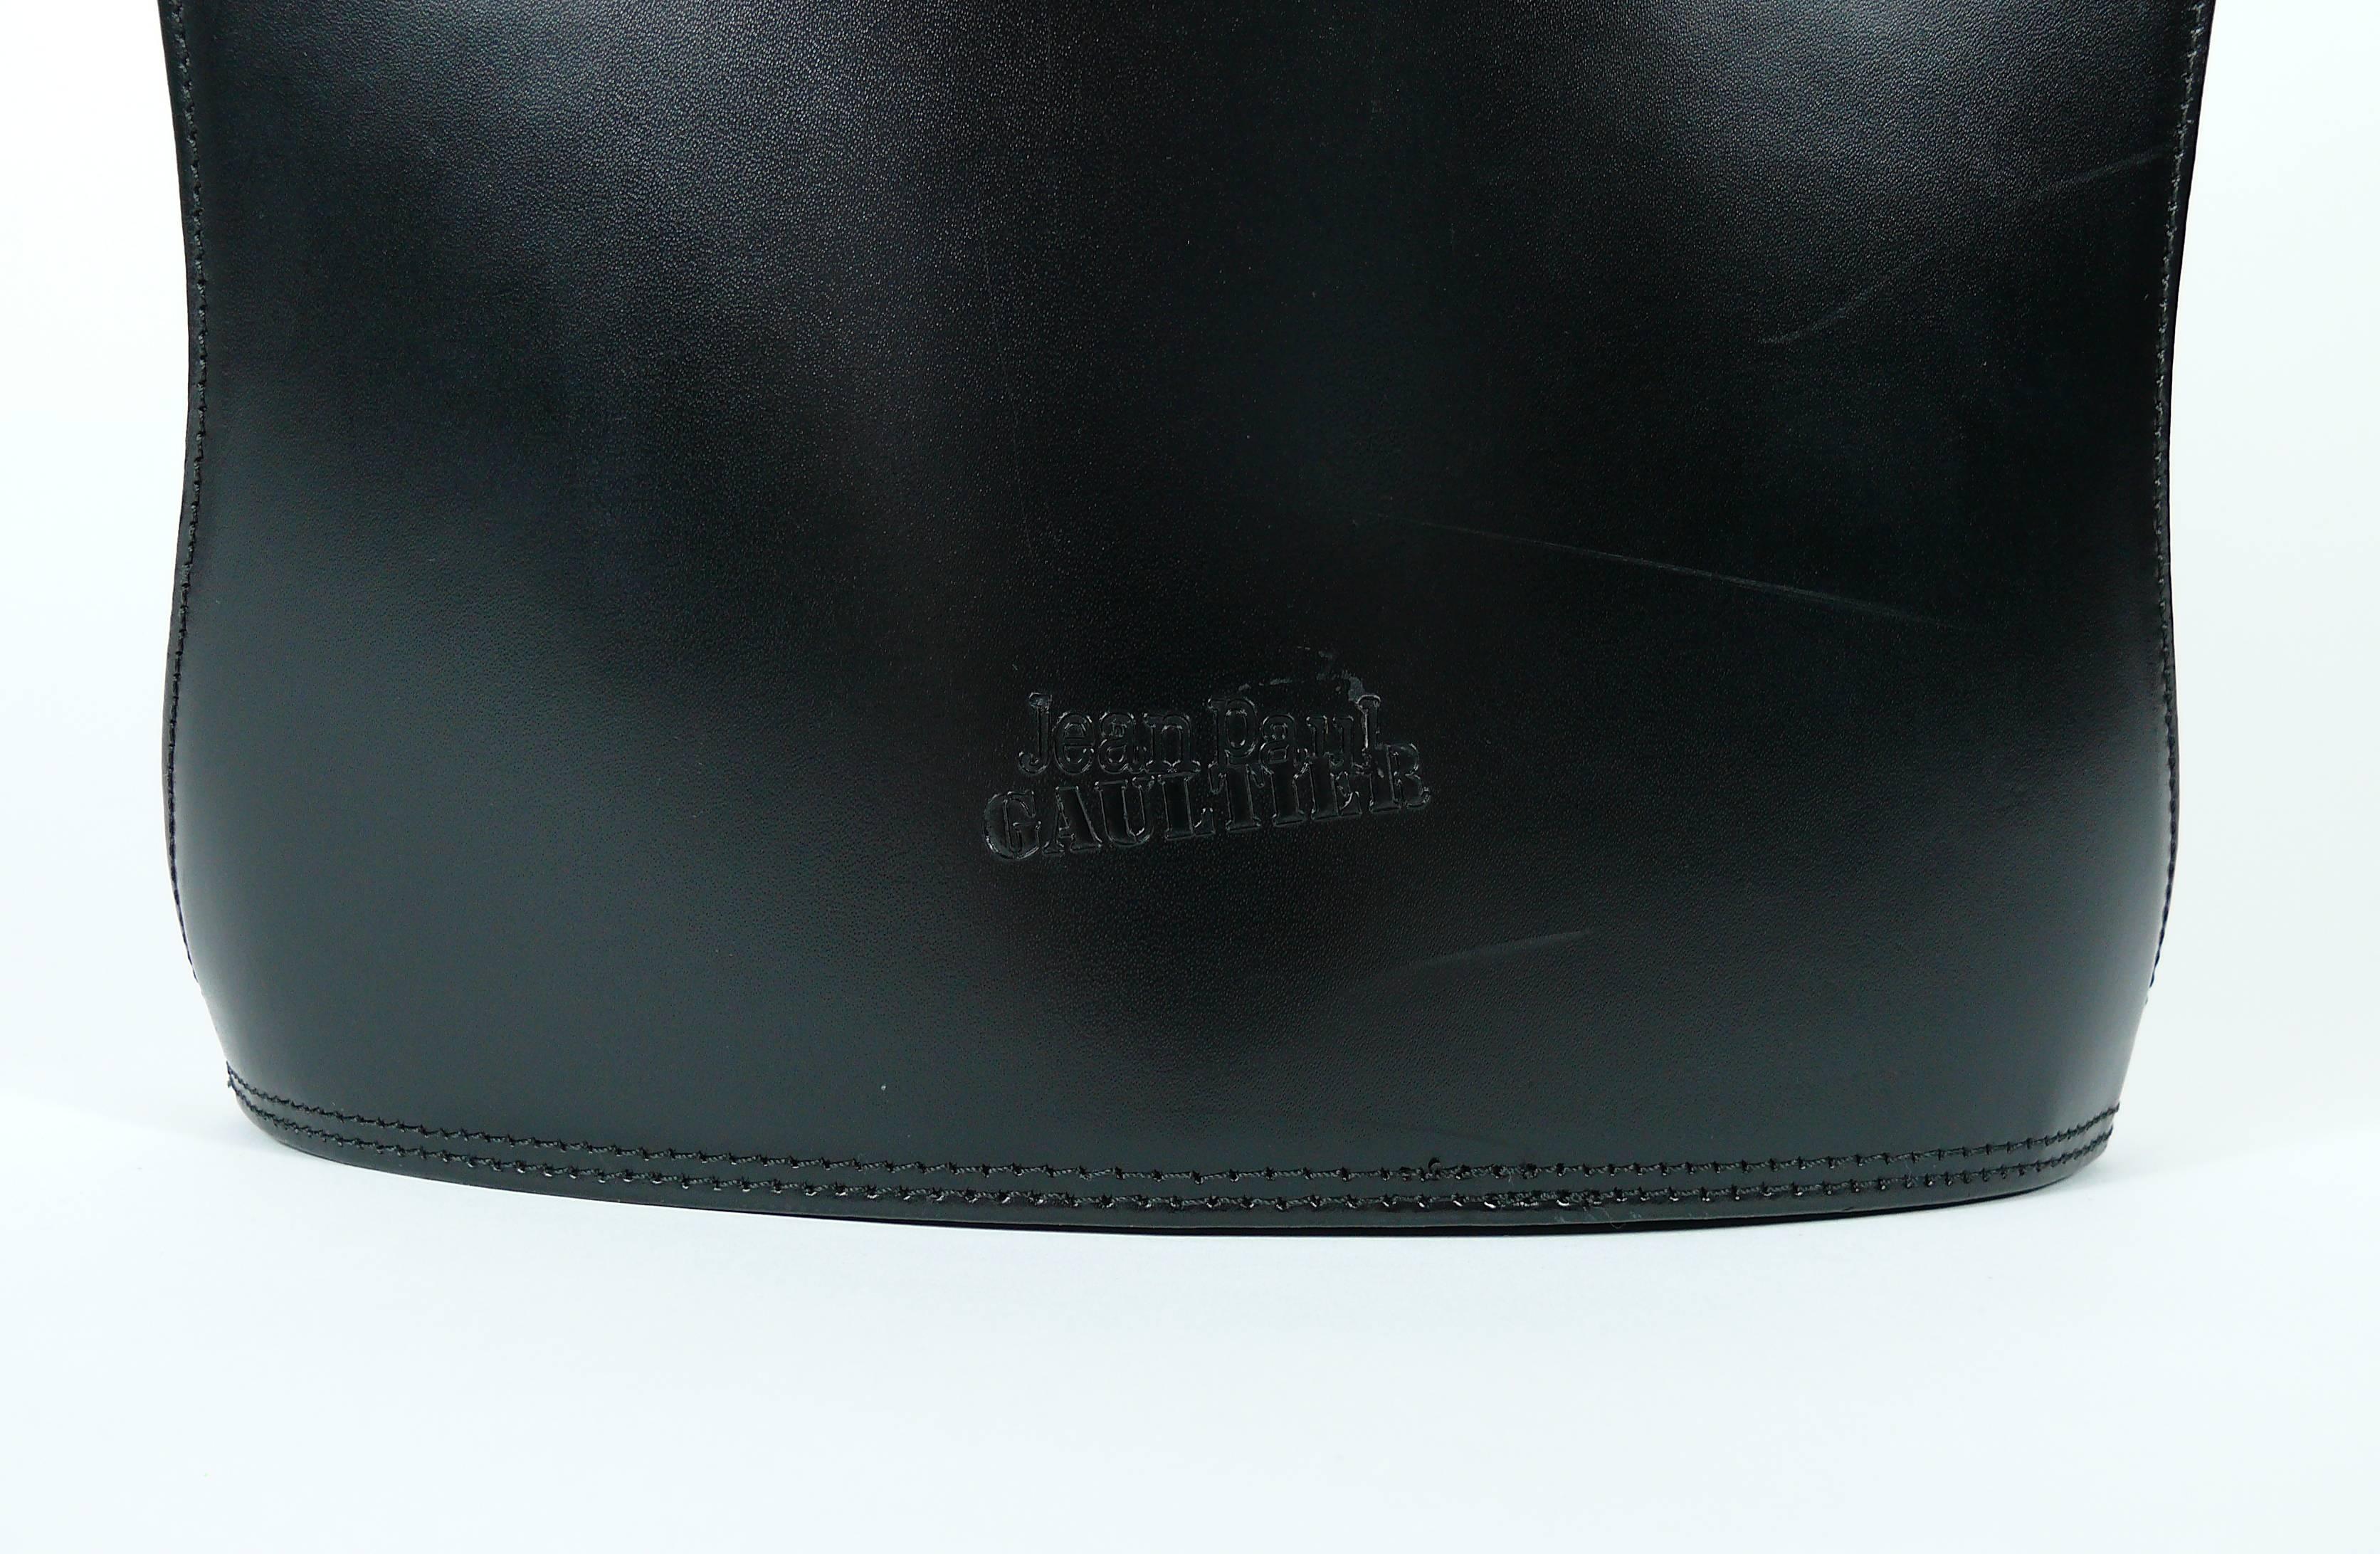 Jean Paul Gaultier Rare 1998 Iconic Black Leather Bustier Handbag 1